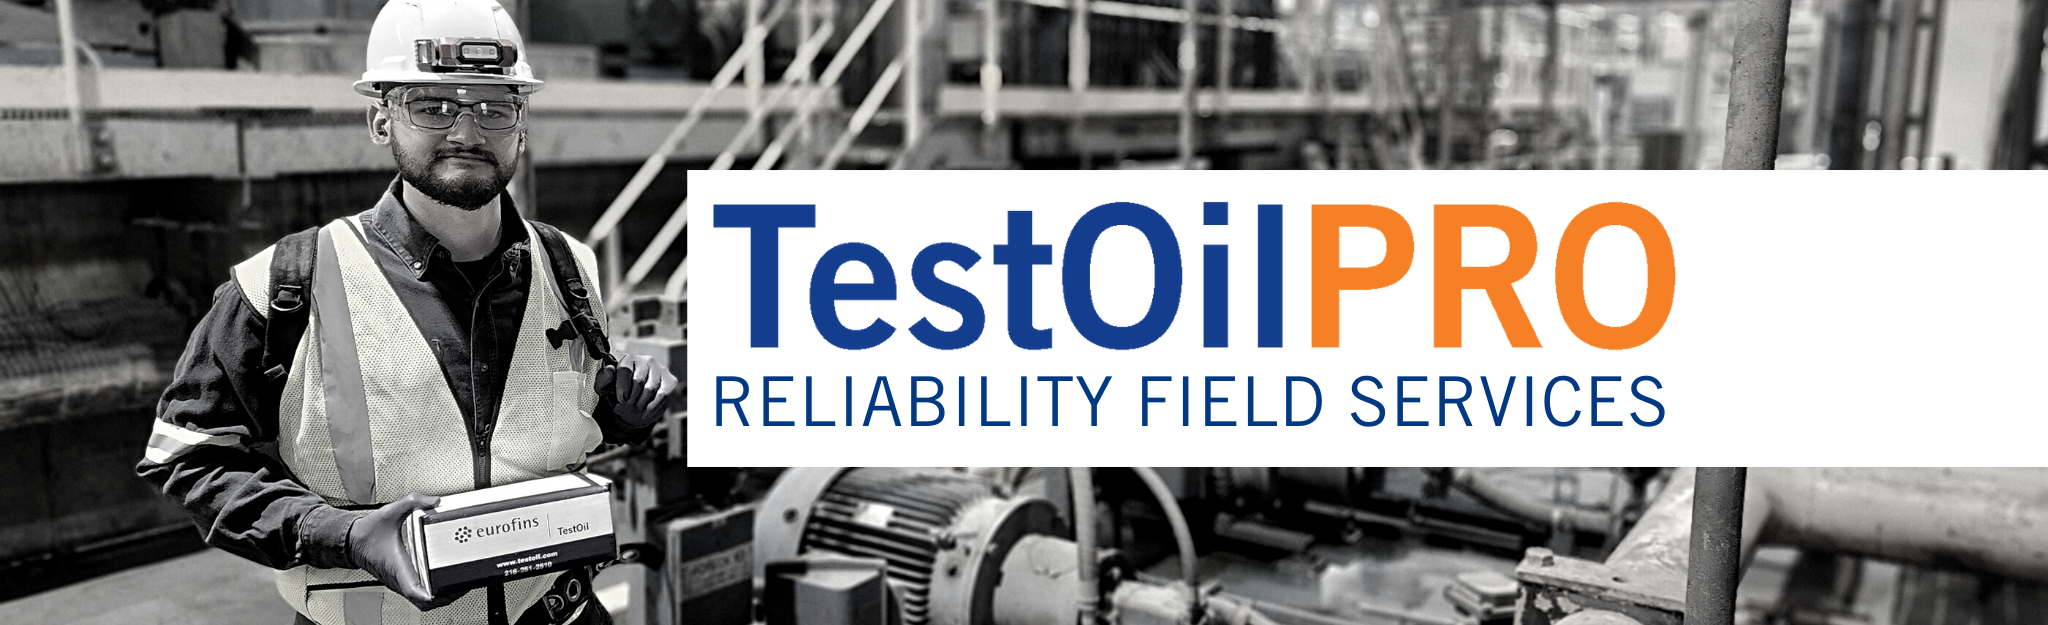 TestOil PRO Reliability Field Services